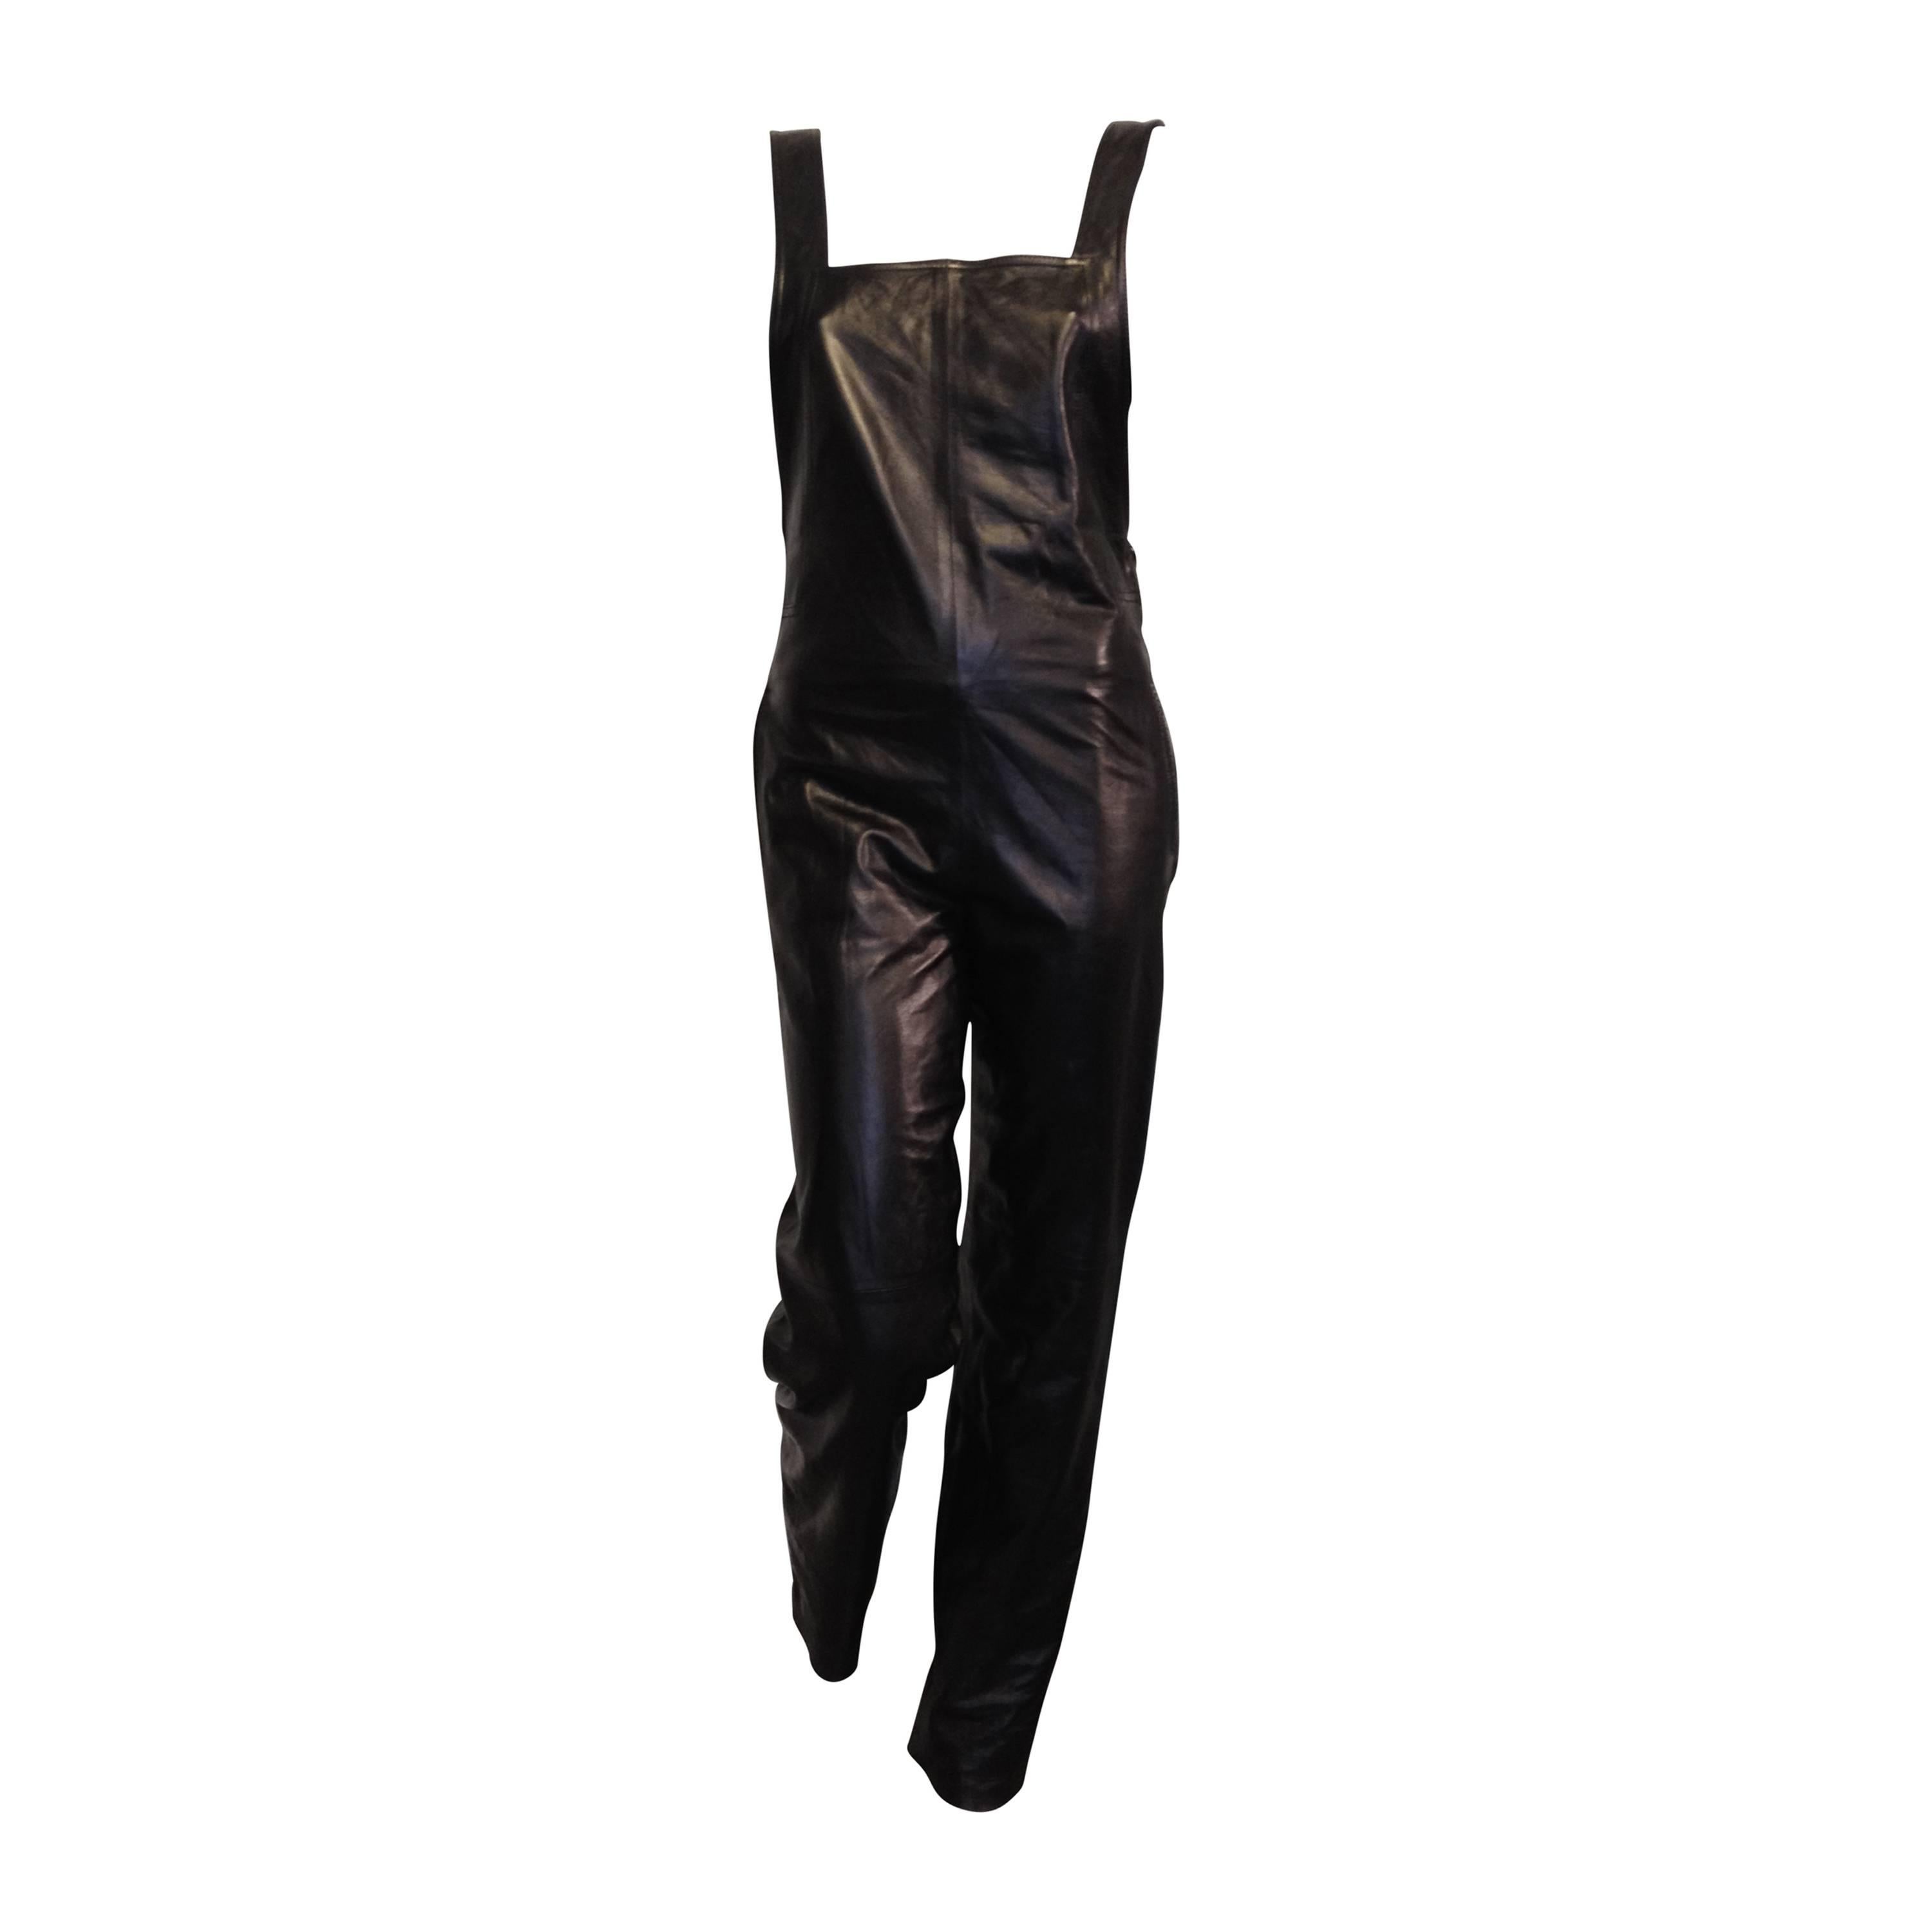 Yves Saint Laurent Black Leather Overalls